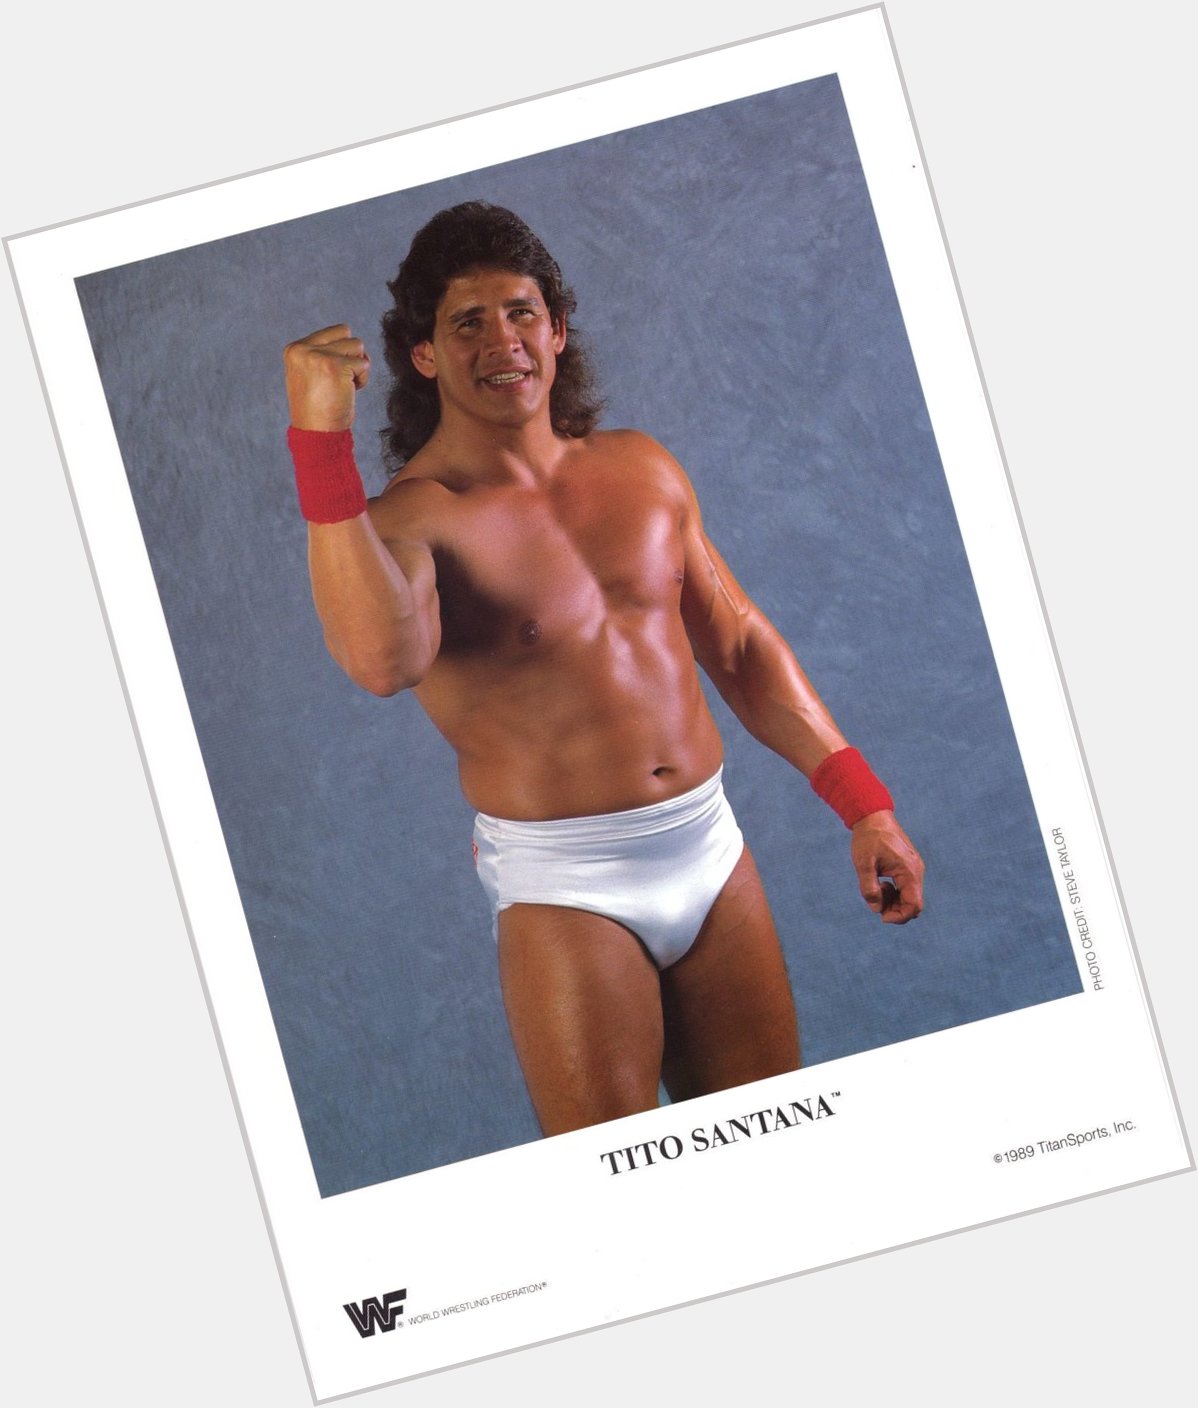 Happy birthday to American professional wrestler Tito Santana, born May 10, 1953. 